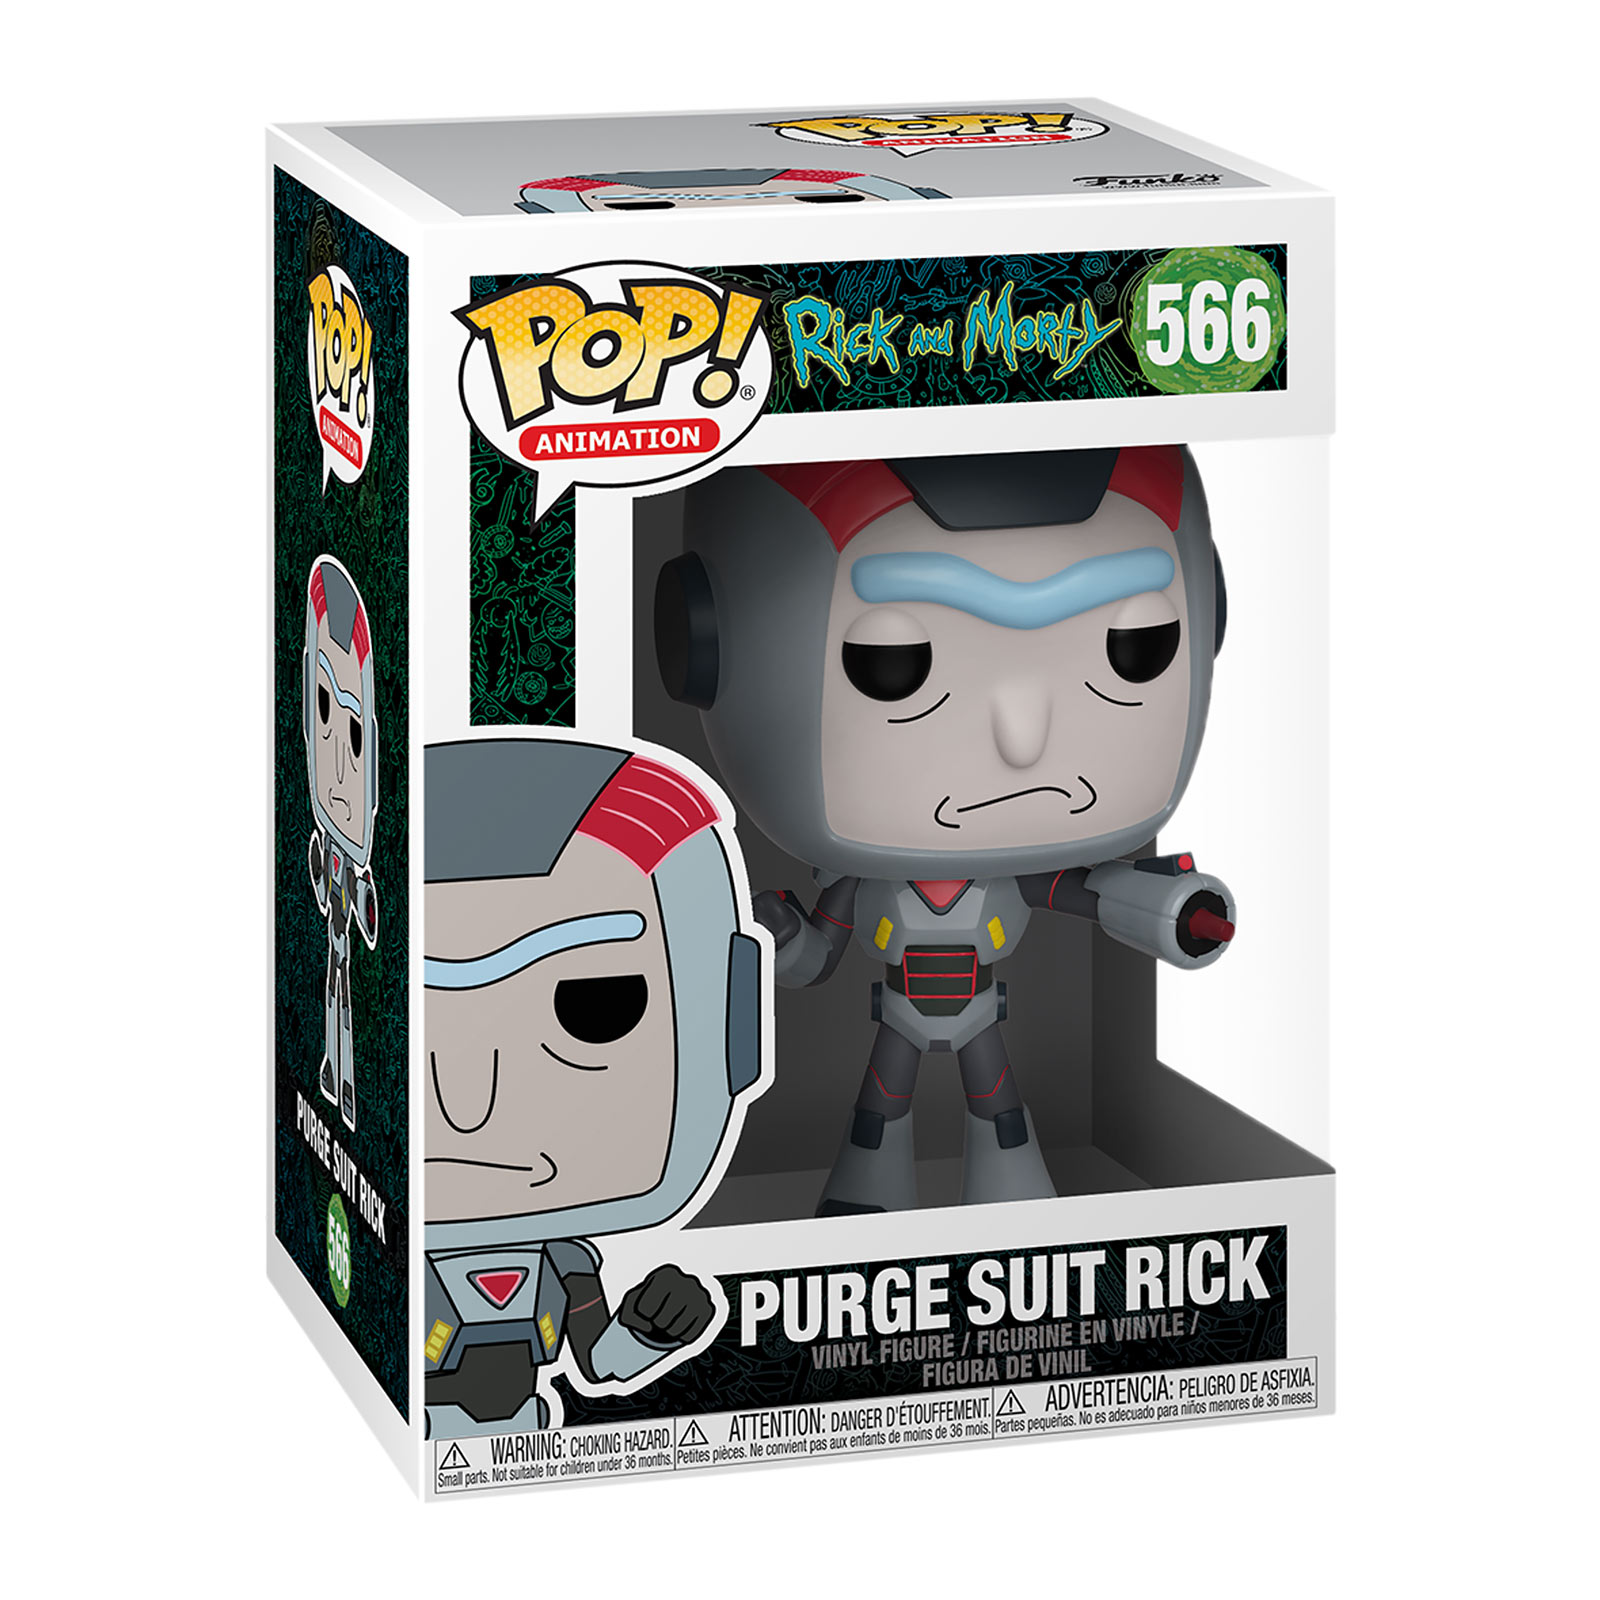 Rick and Morty - Purge Suit Rick Funko Pop Figure